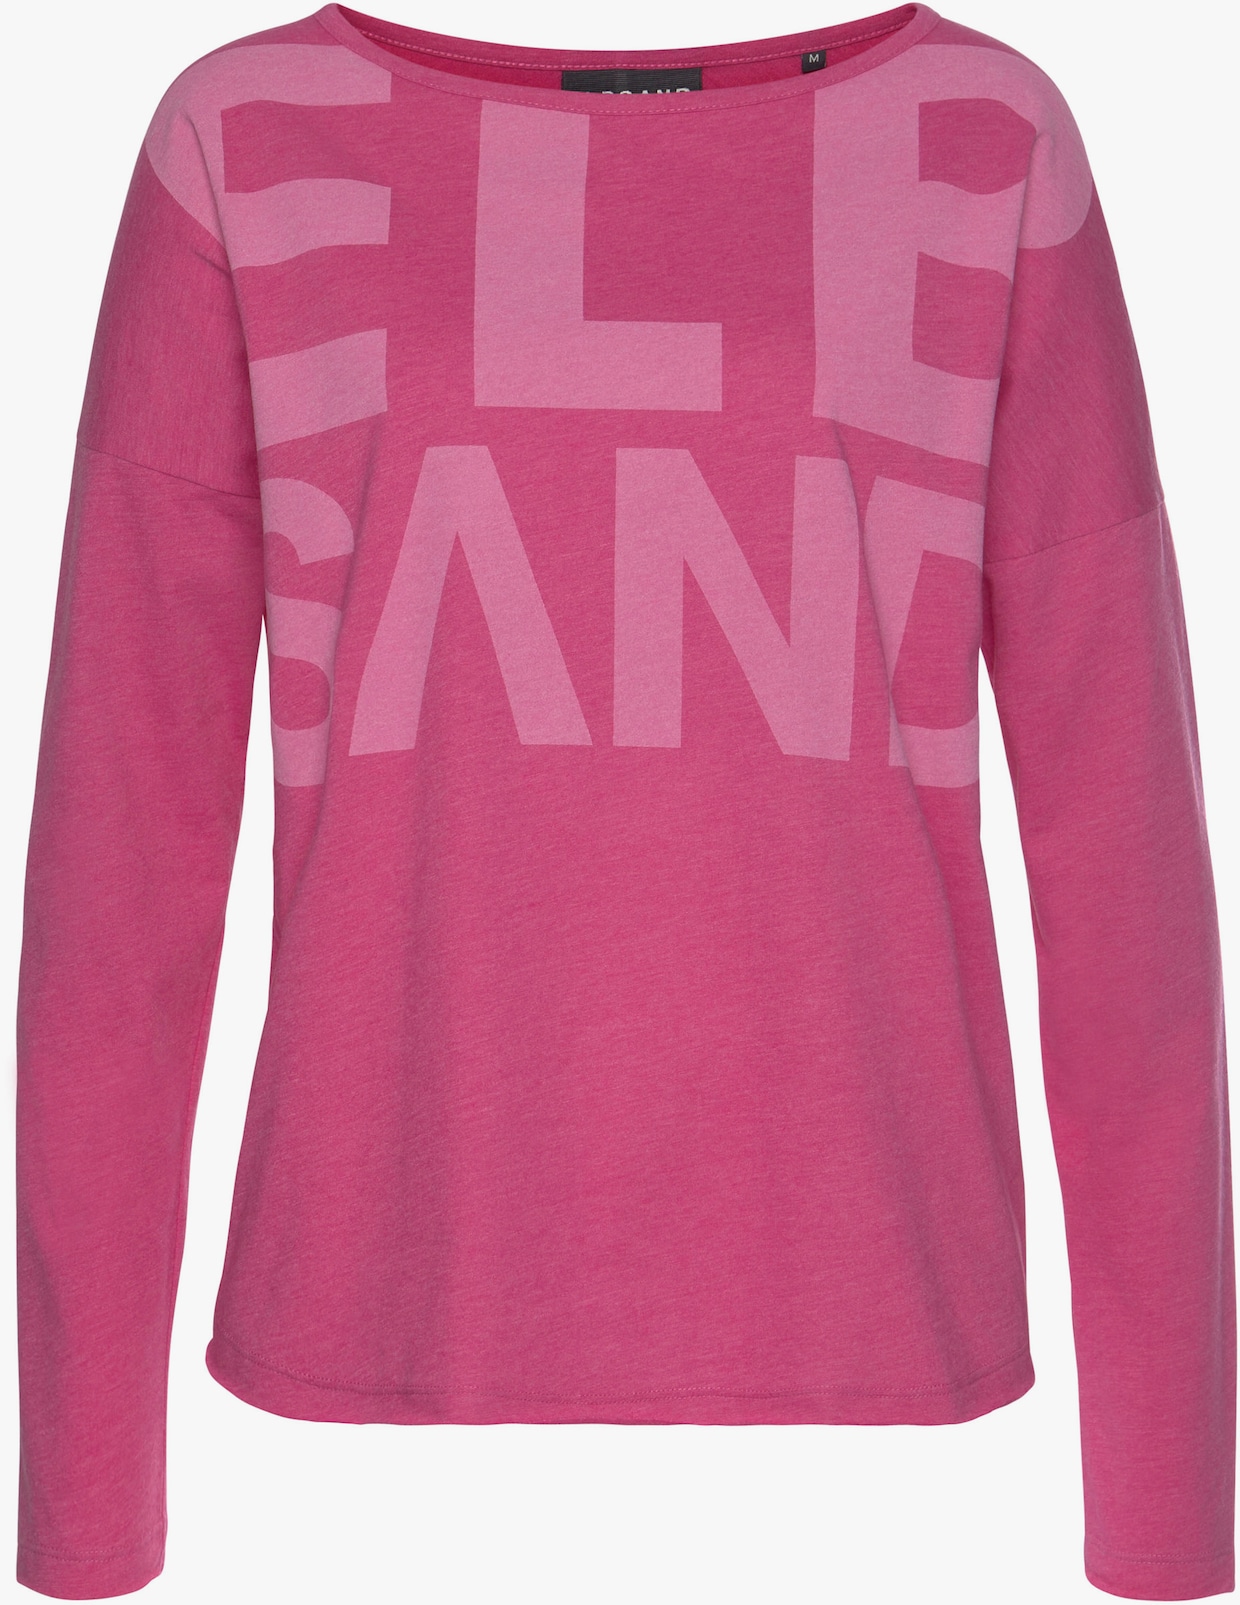 Elbsand Shirt met lange mouwen - pink